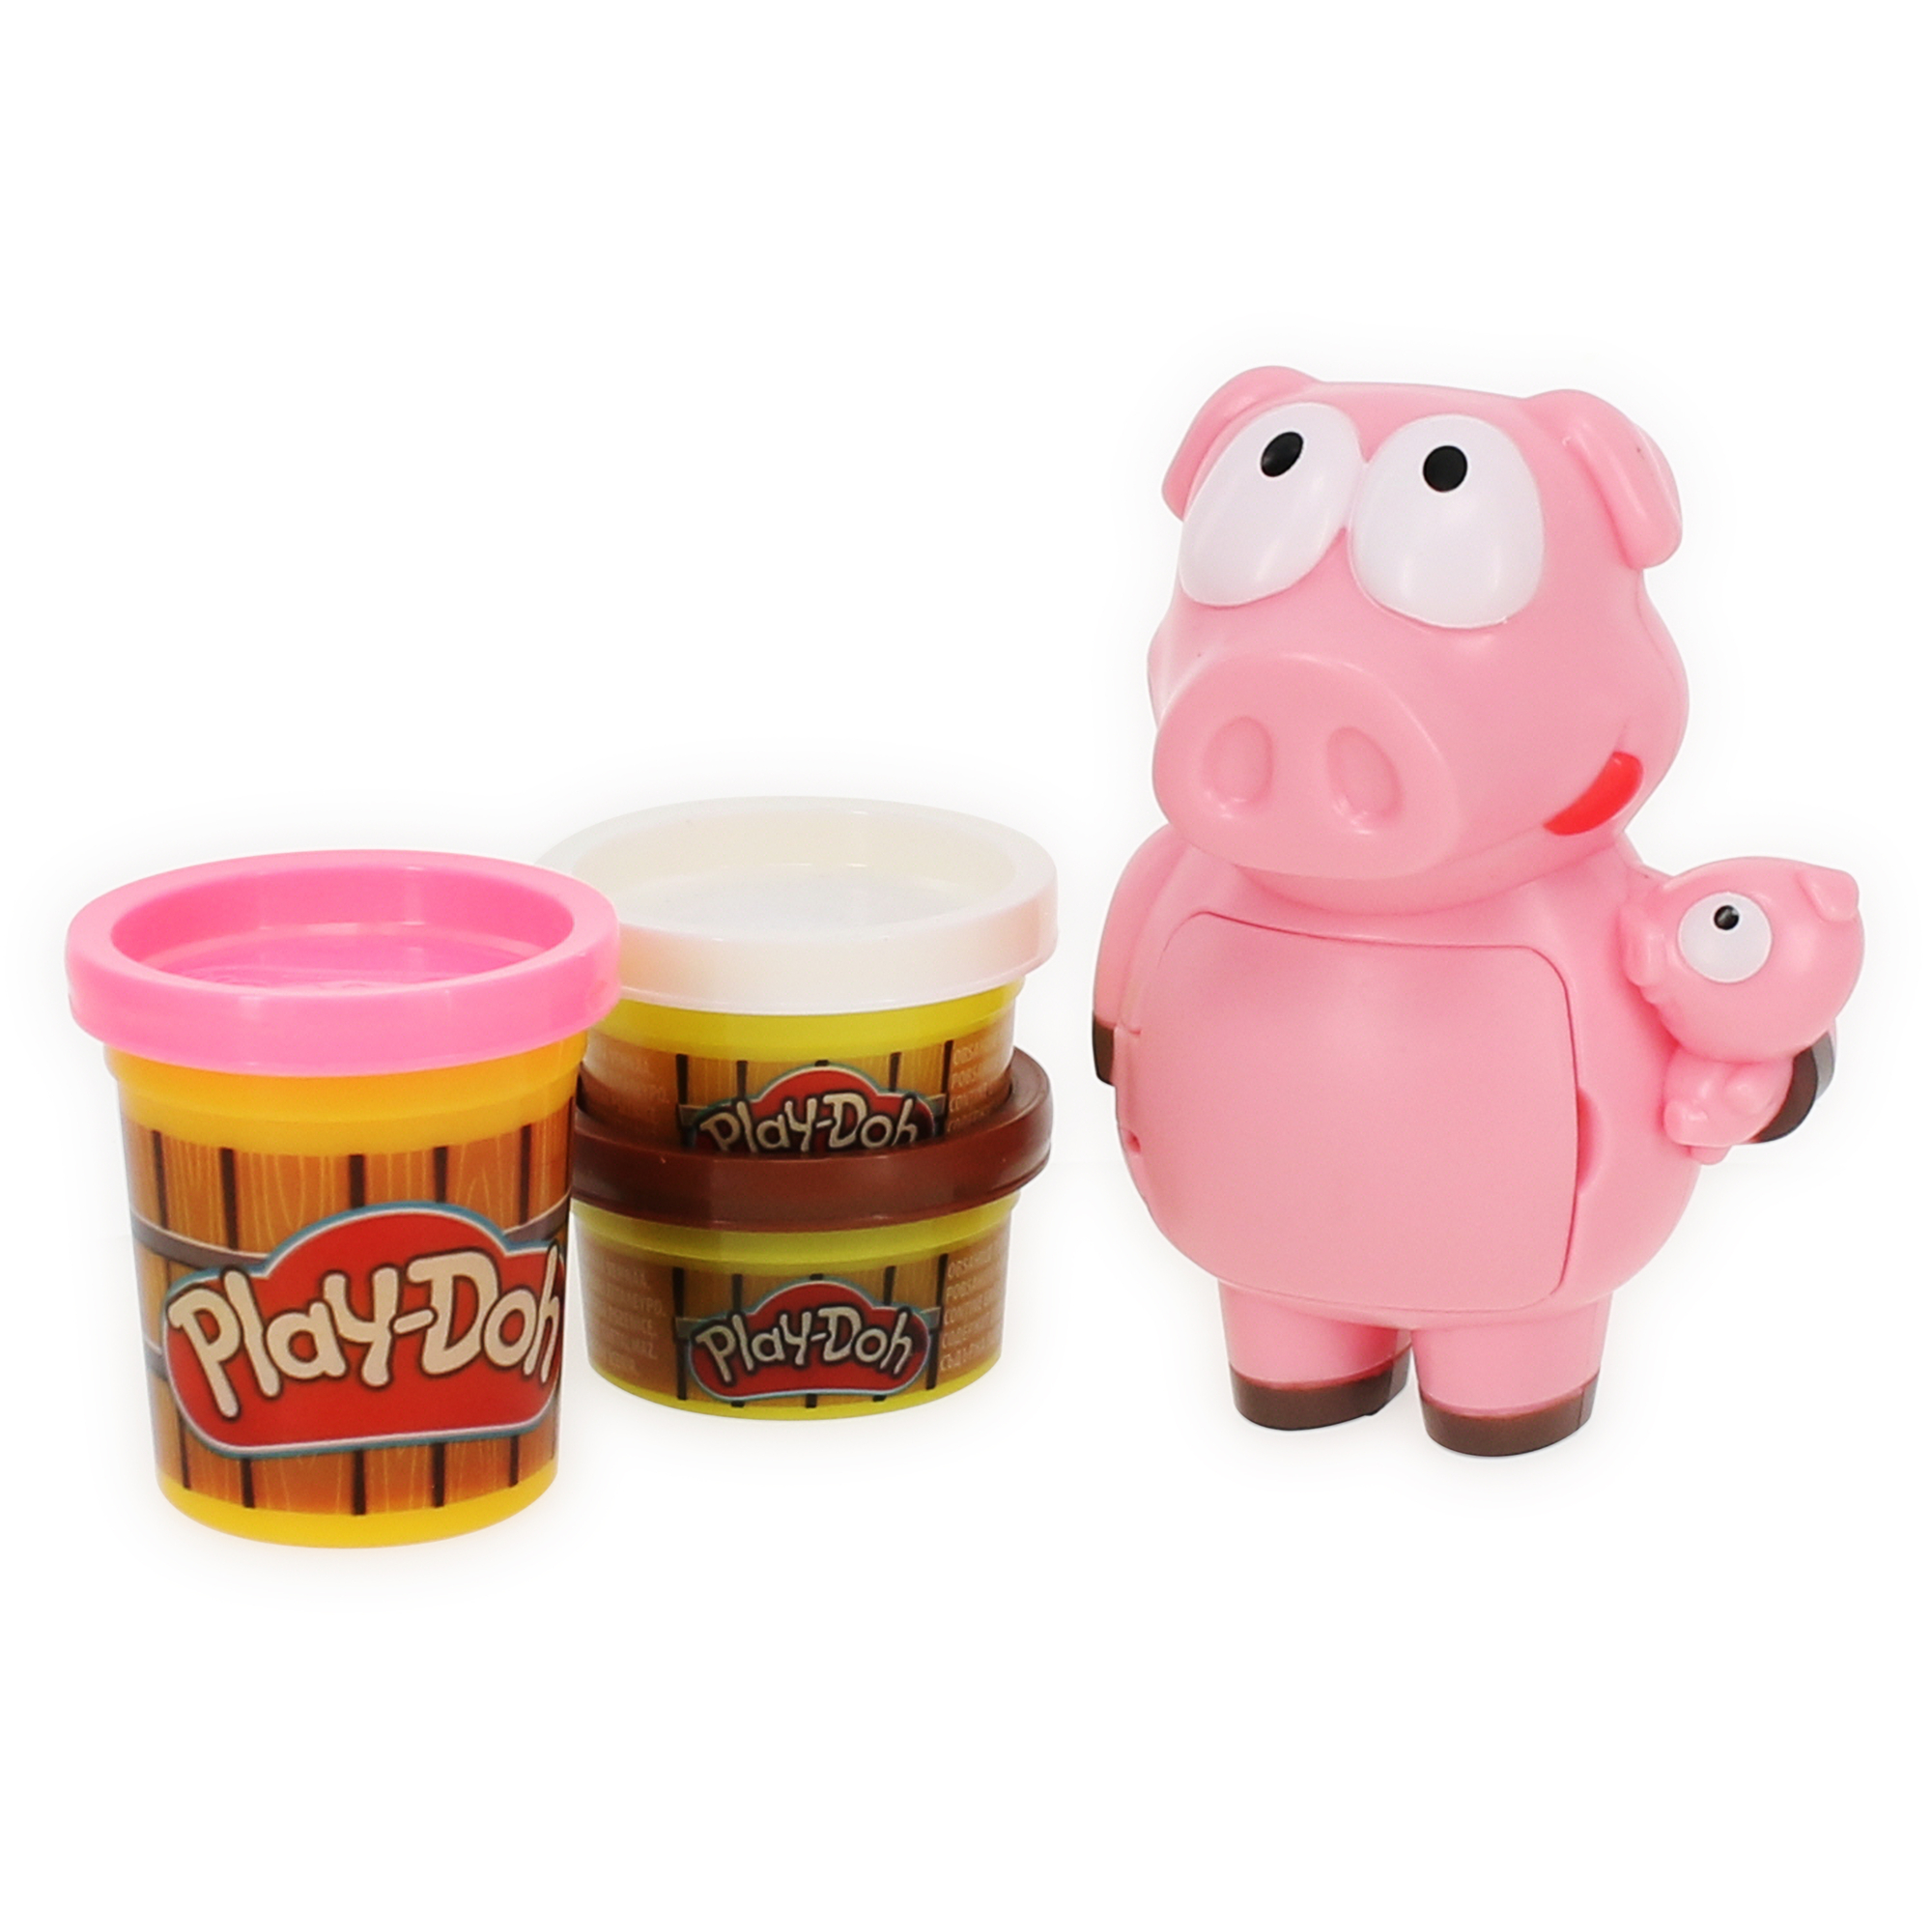 Play-Doh® Animal Crew - Piggy Playtime Farm Animal Playset